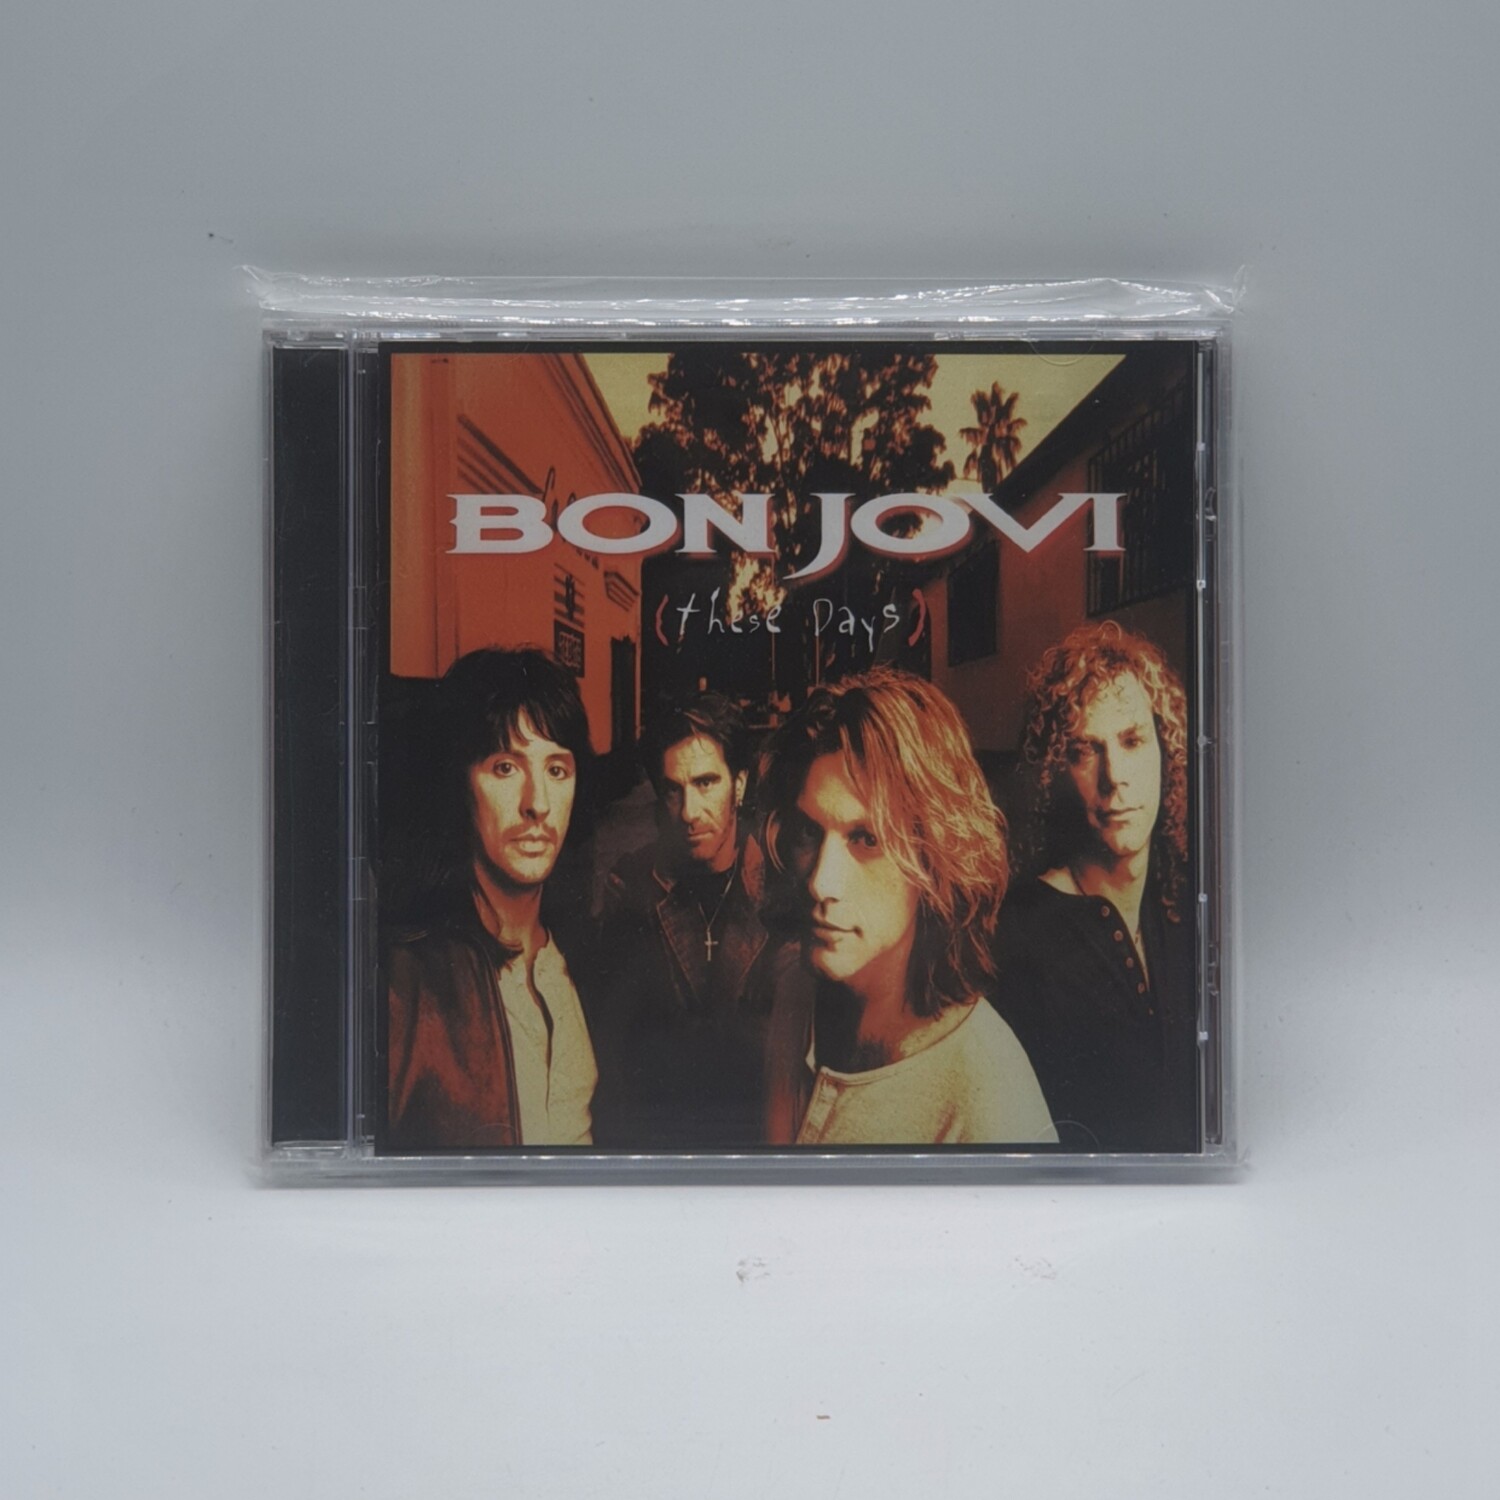 [USED] BON JOVI -THESE DAY- CD